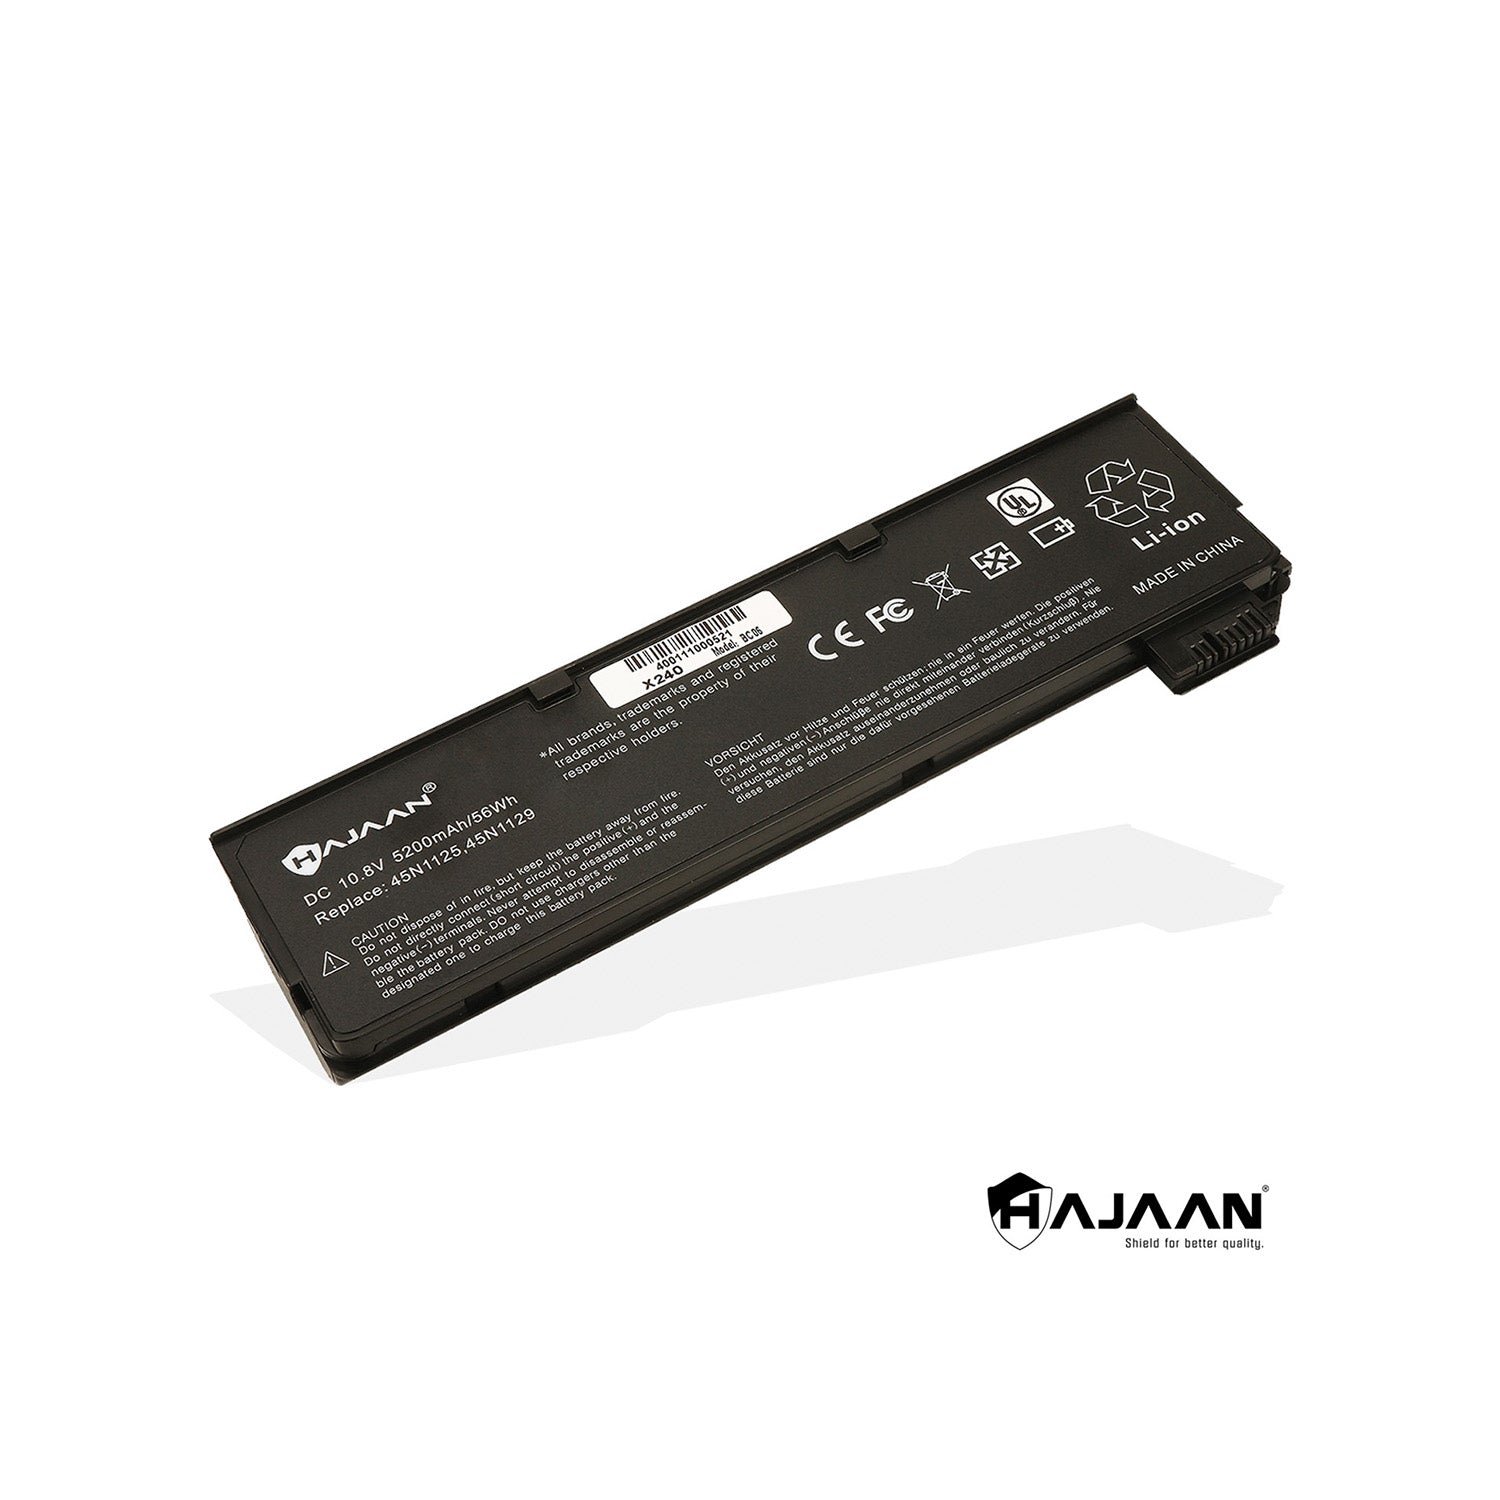 HAJAAN New Laptop Batteries for 45N1125 LENOVO ThinkPad X240 X250 X260 X270 T440 T440S T450 T450S T460 T460P T470P T550, Li-ion(10.8V, 5200mAh /56Wh, 6- Cells), 1 Year Warranty